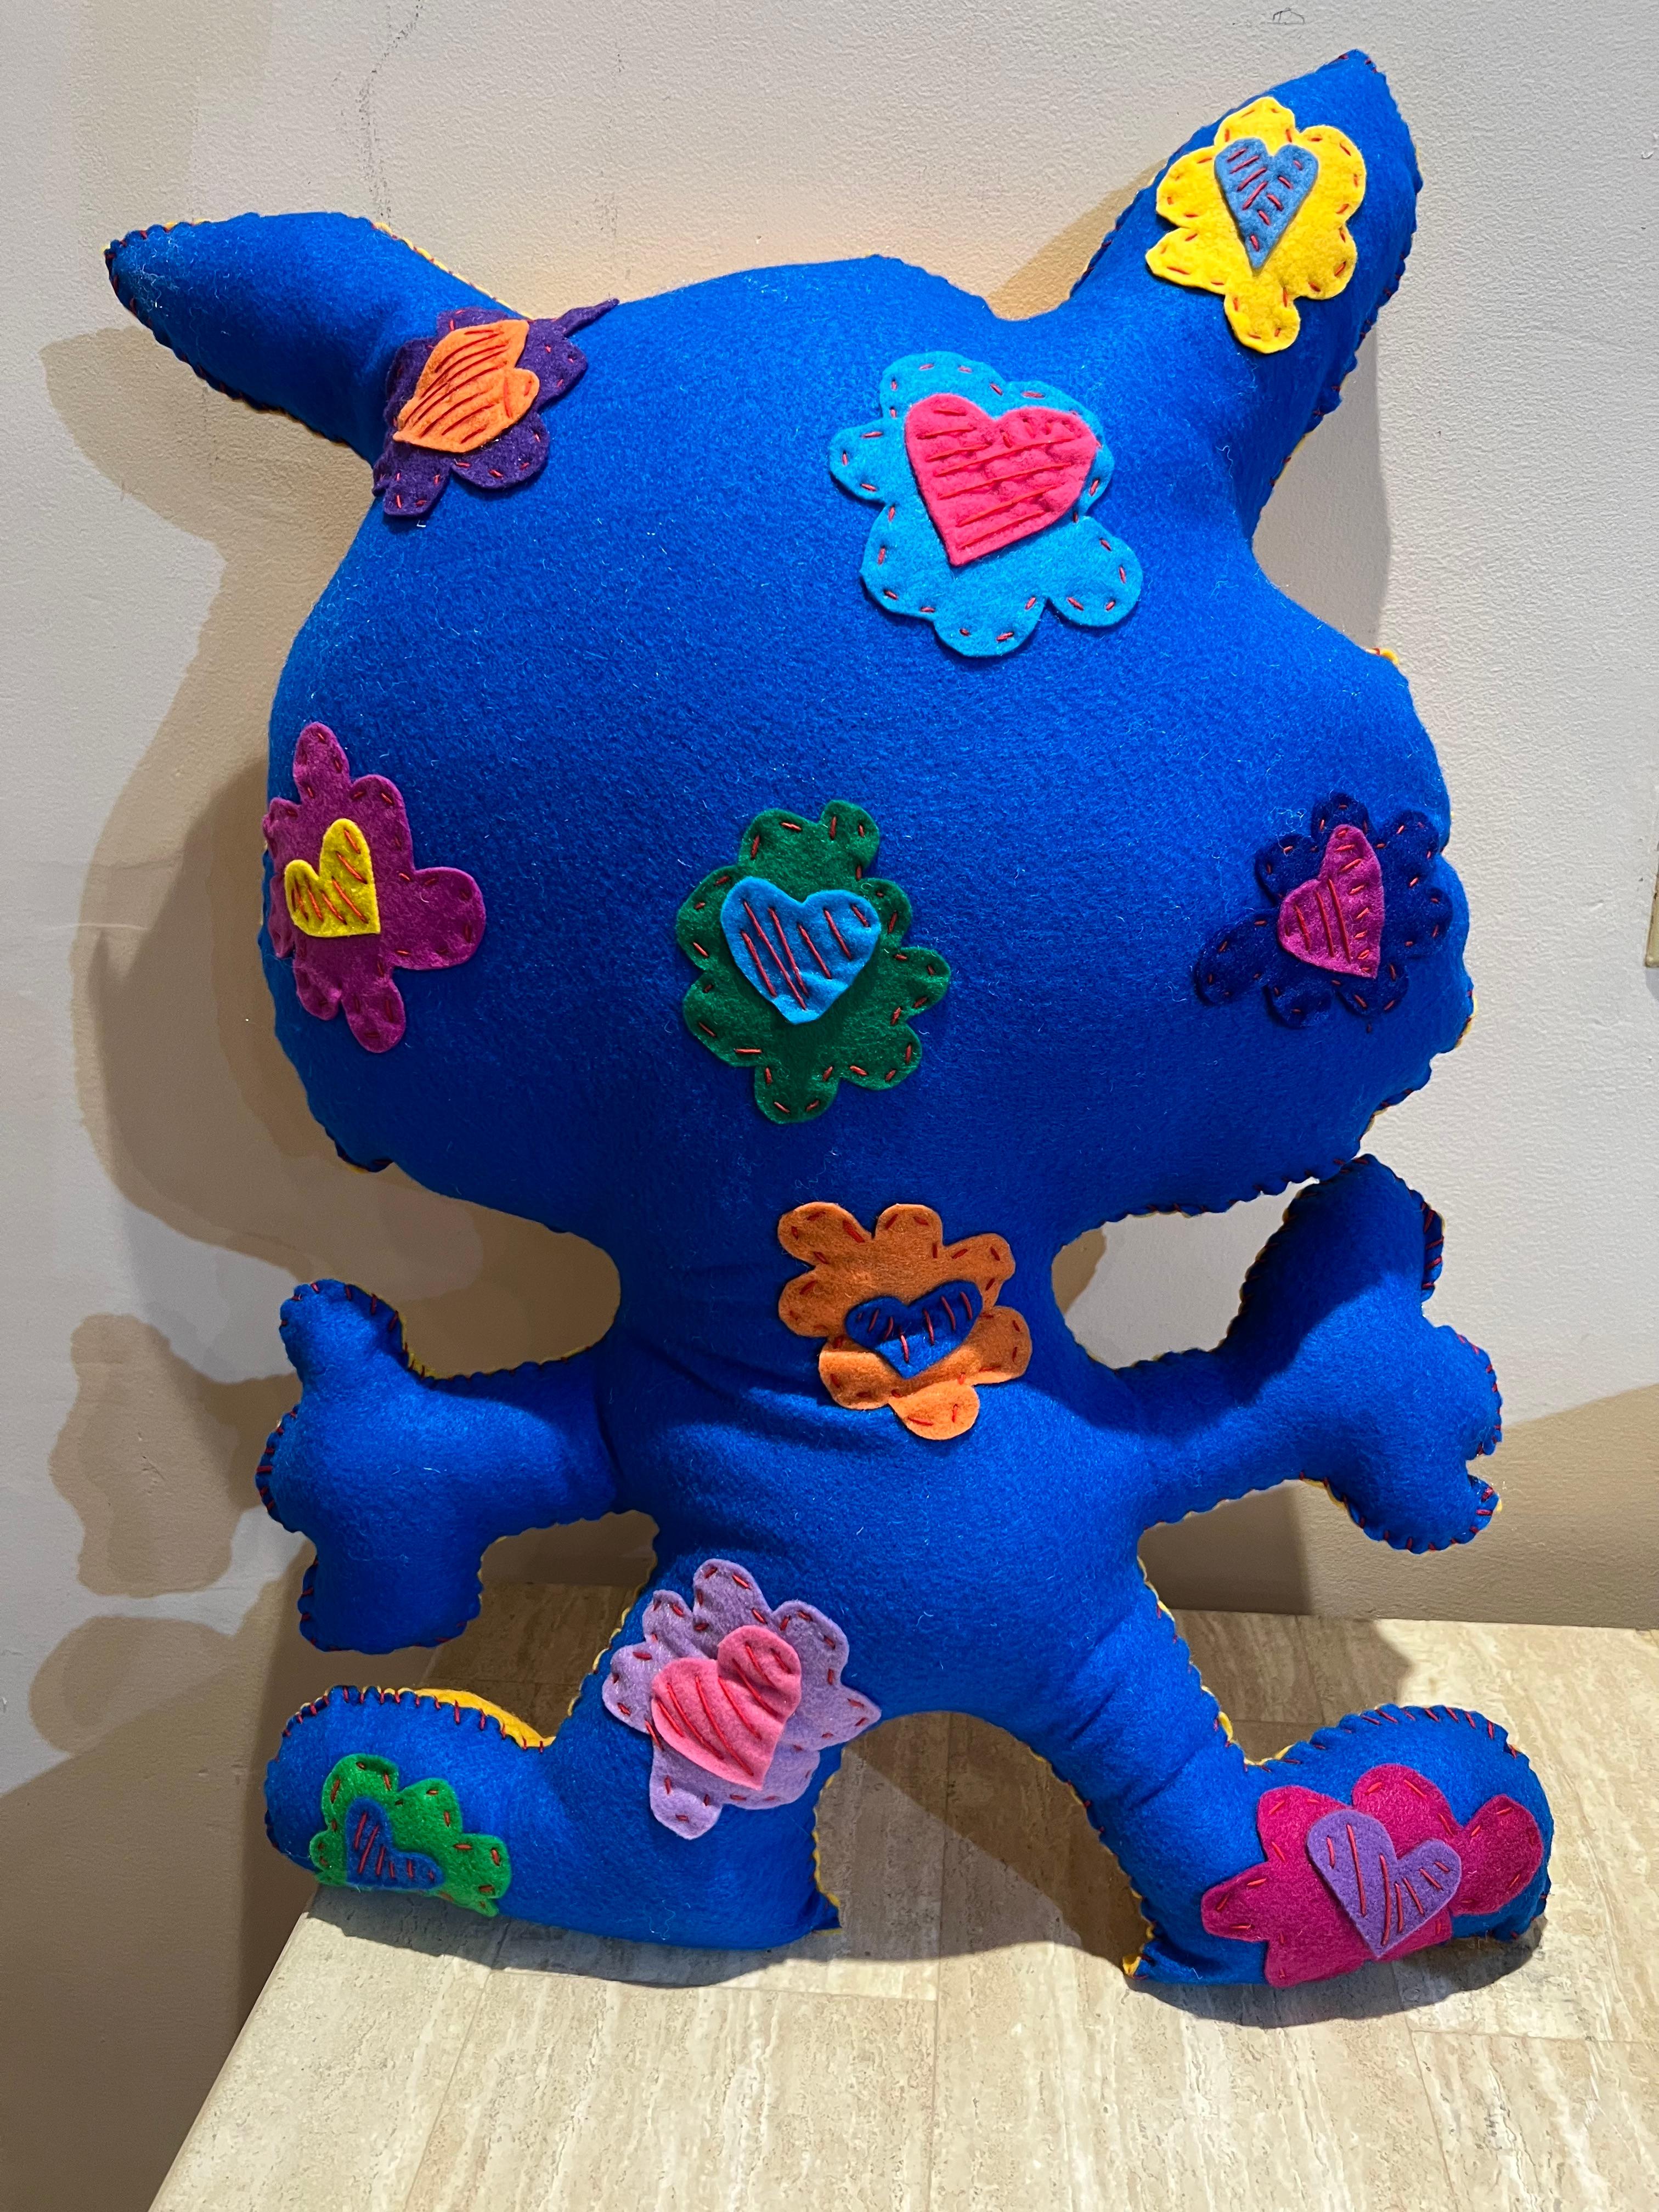 Free Range Critter, soft sculpture, Kerry Green, Santa Fe, yellow, blue, hearts 1